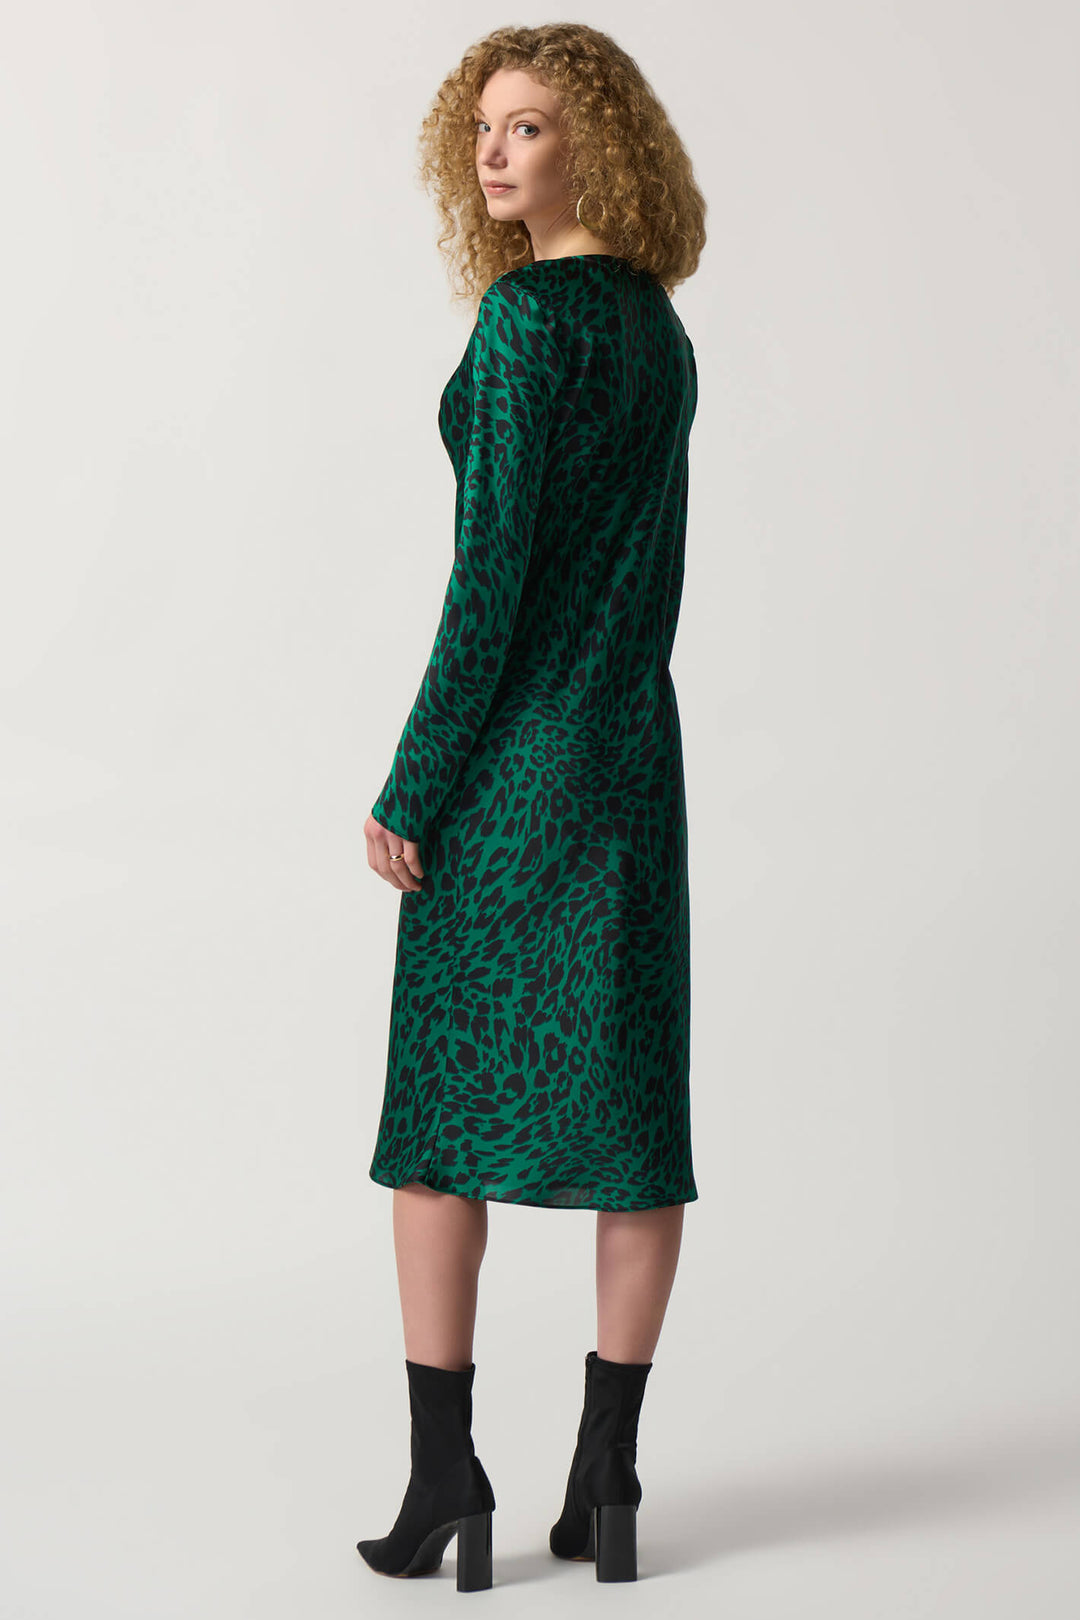 Joseph Ribkoff 233115 Emerald Green Leopard Print Satin Dress - Experience Boutique